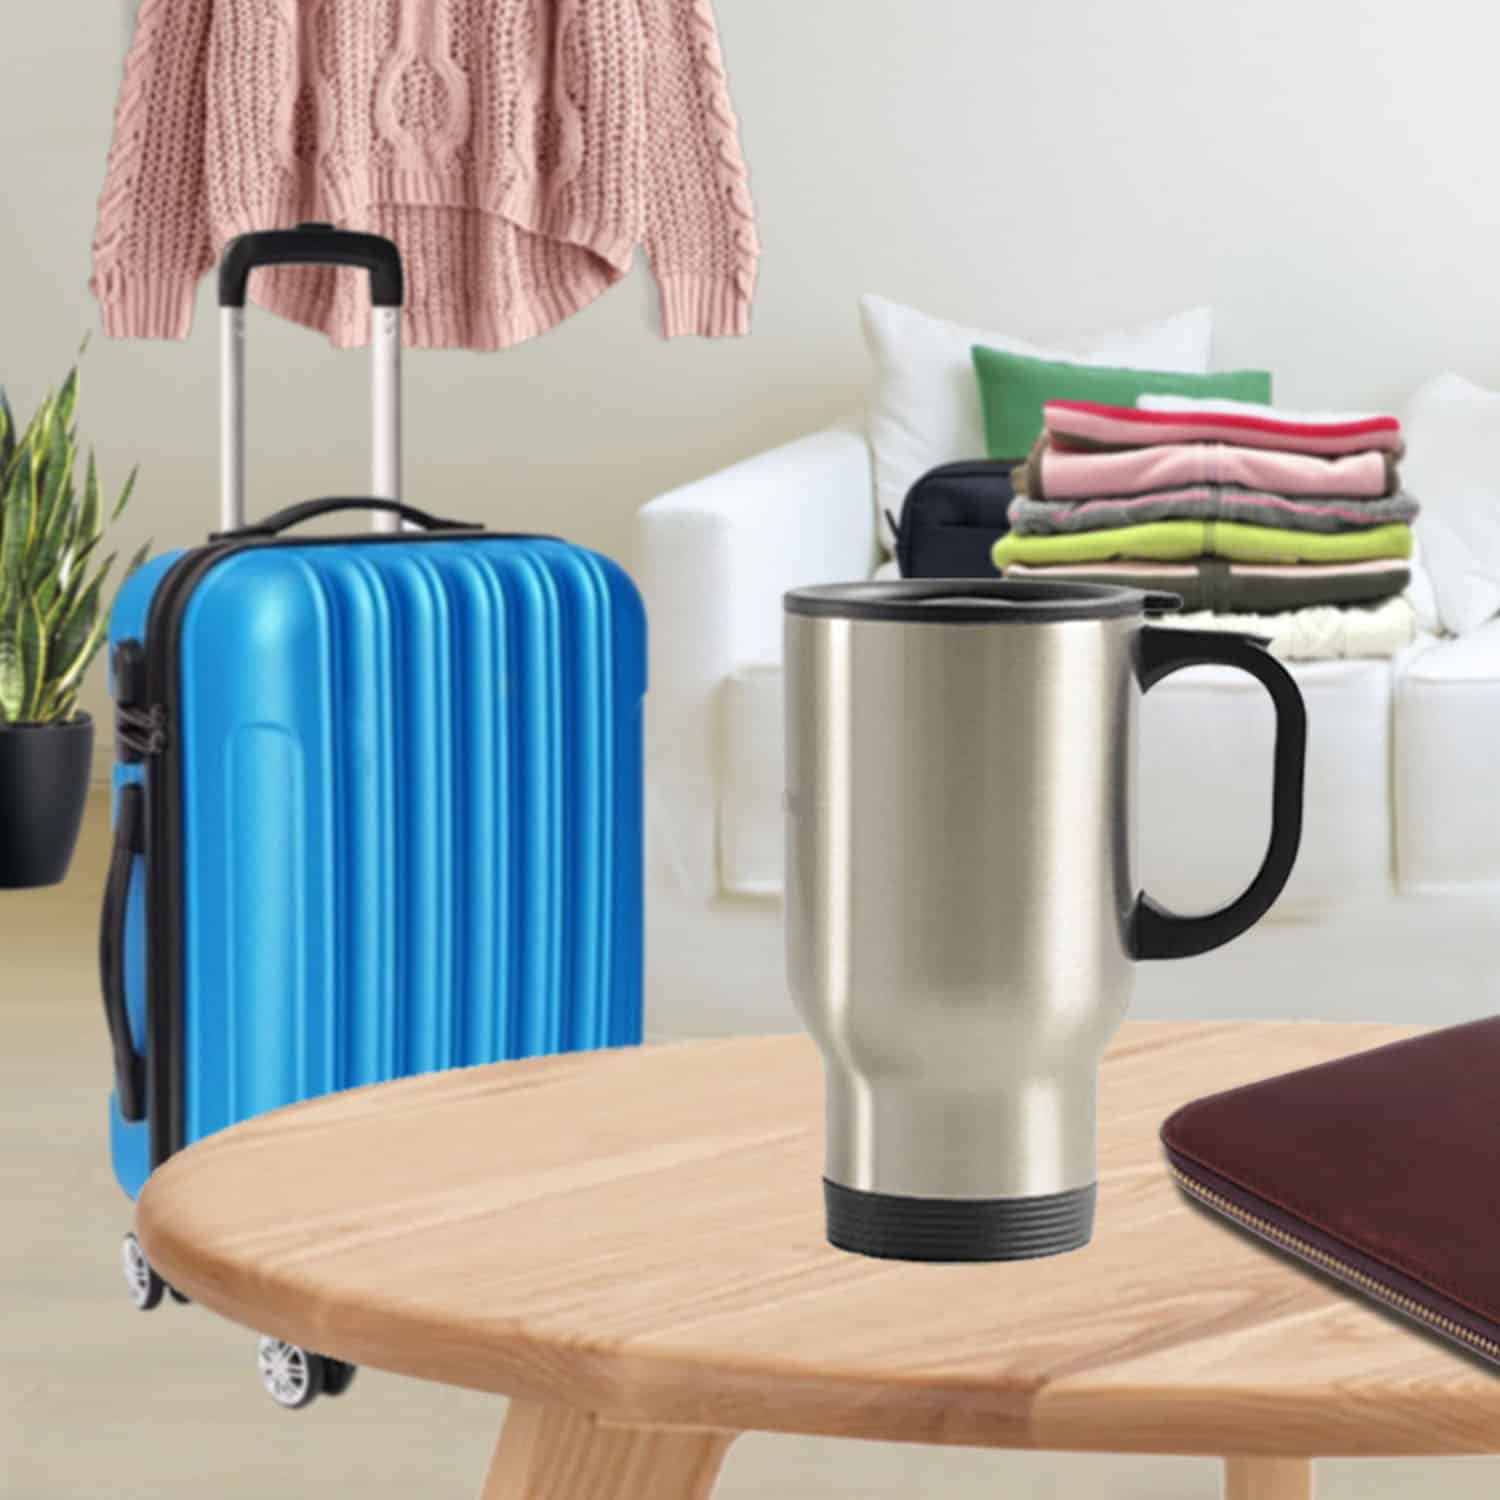 Free travel mug mockups to increase your ecommerce sales